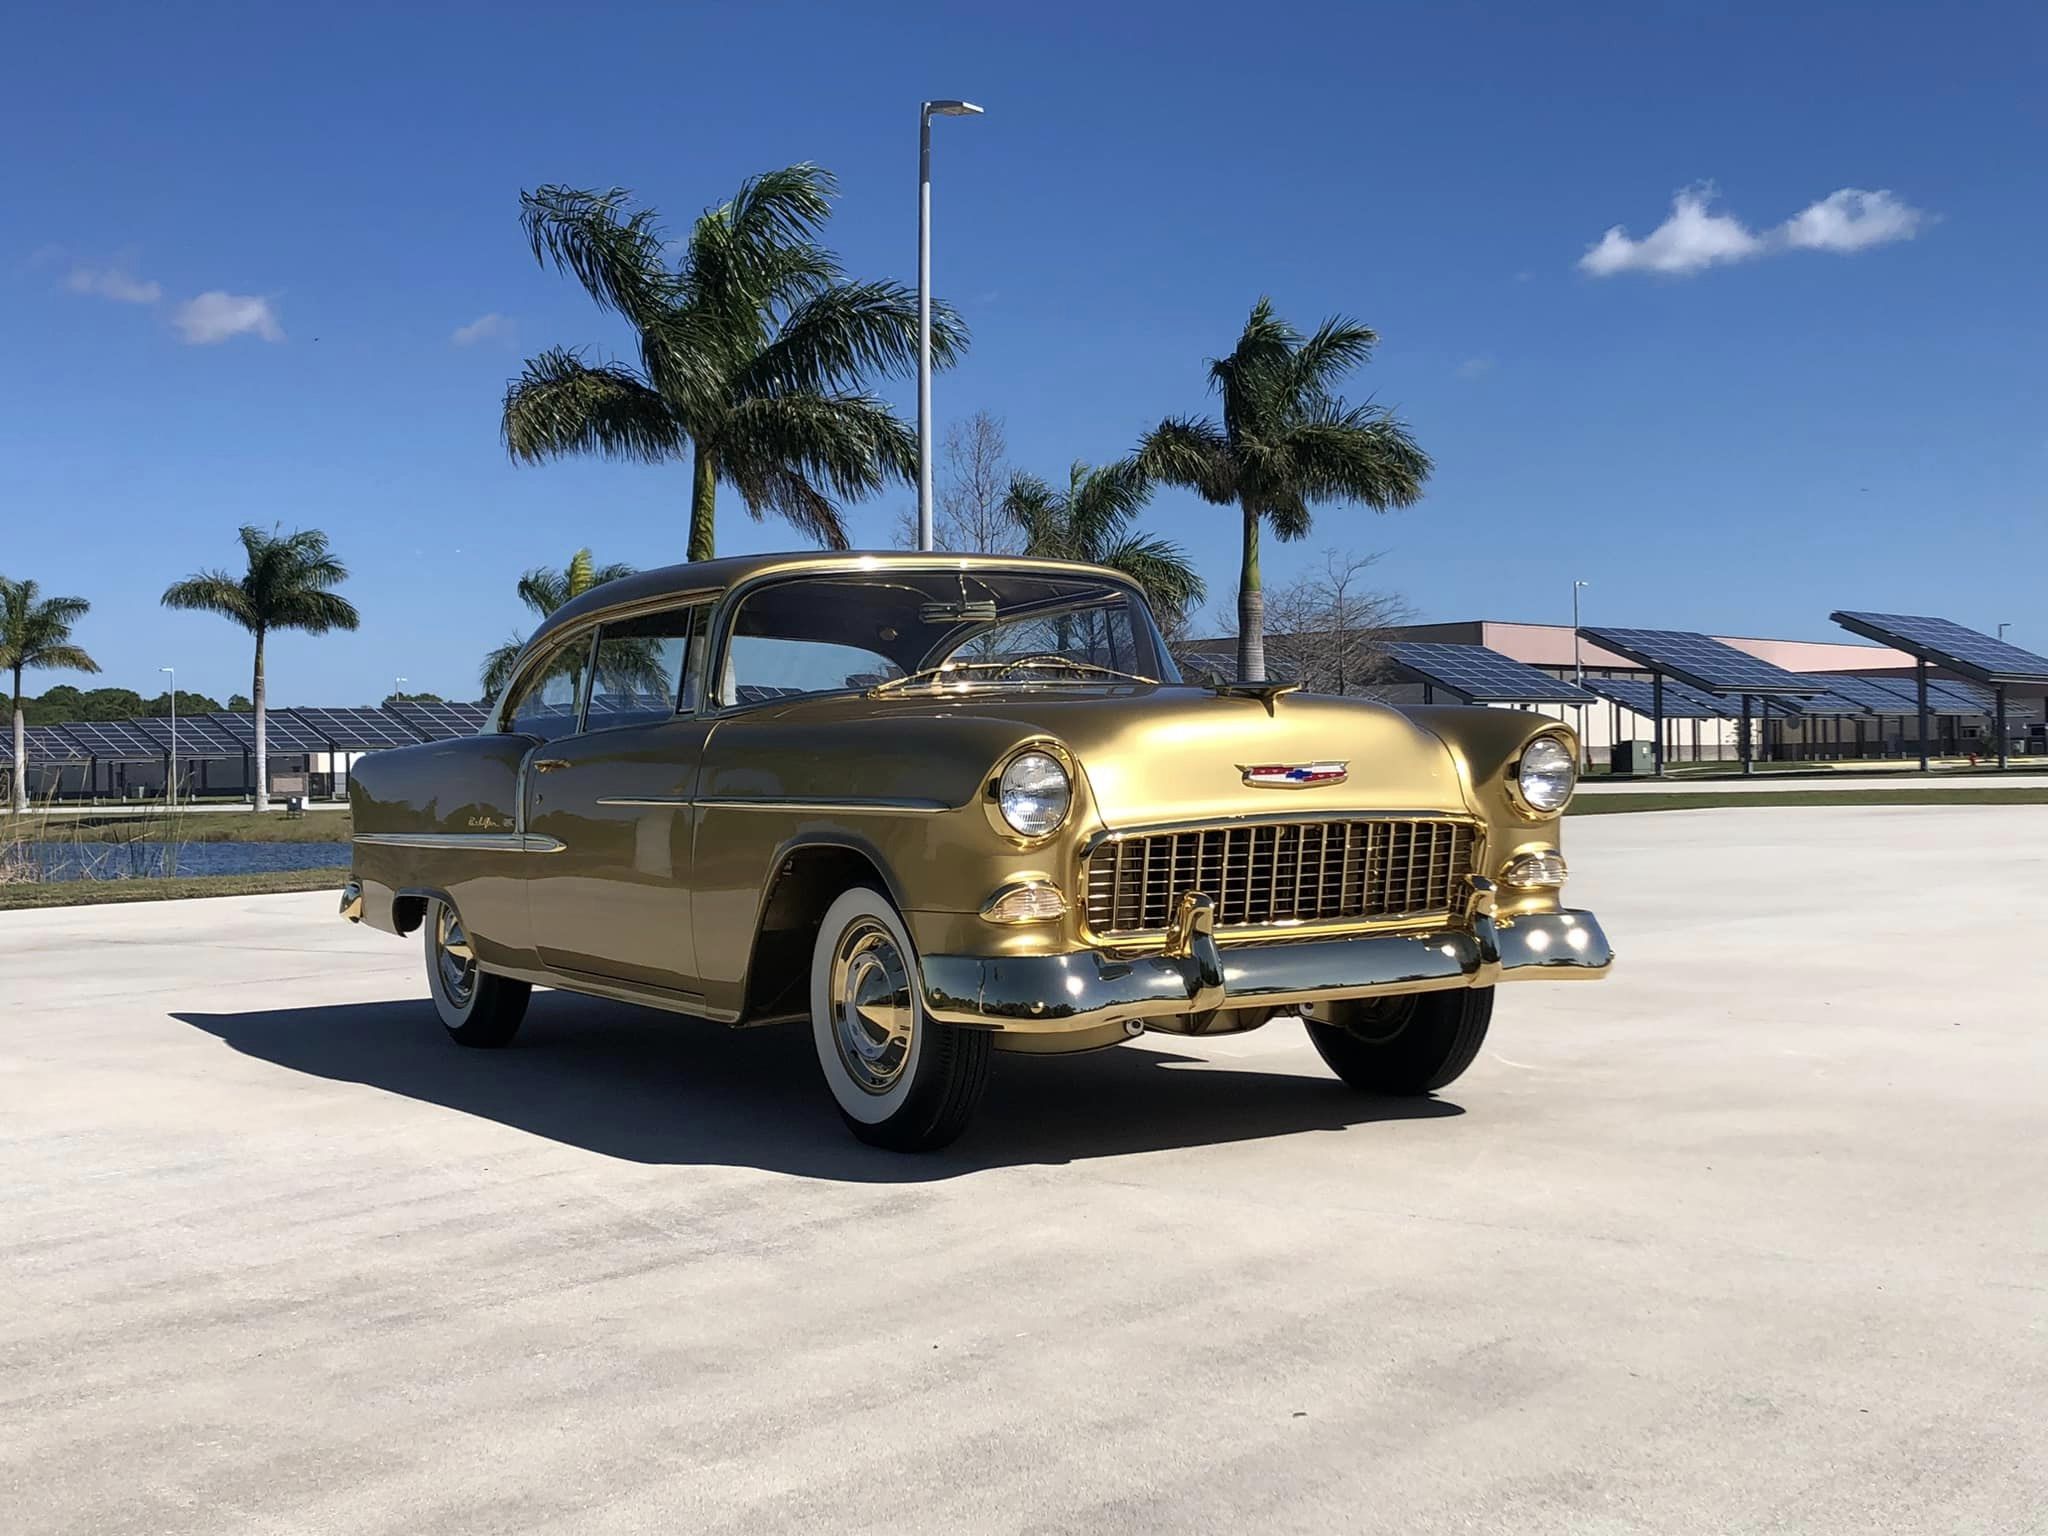 The Golden 1955 Chevrolet Bel Air